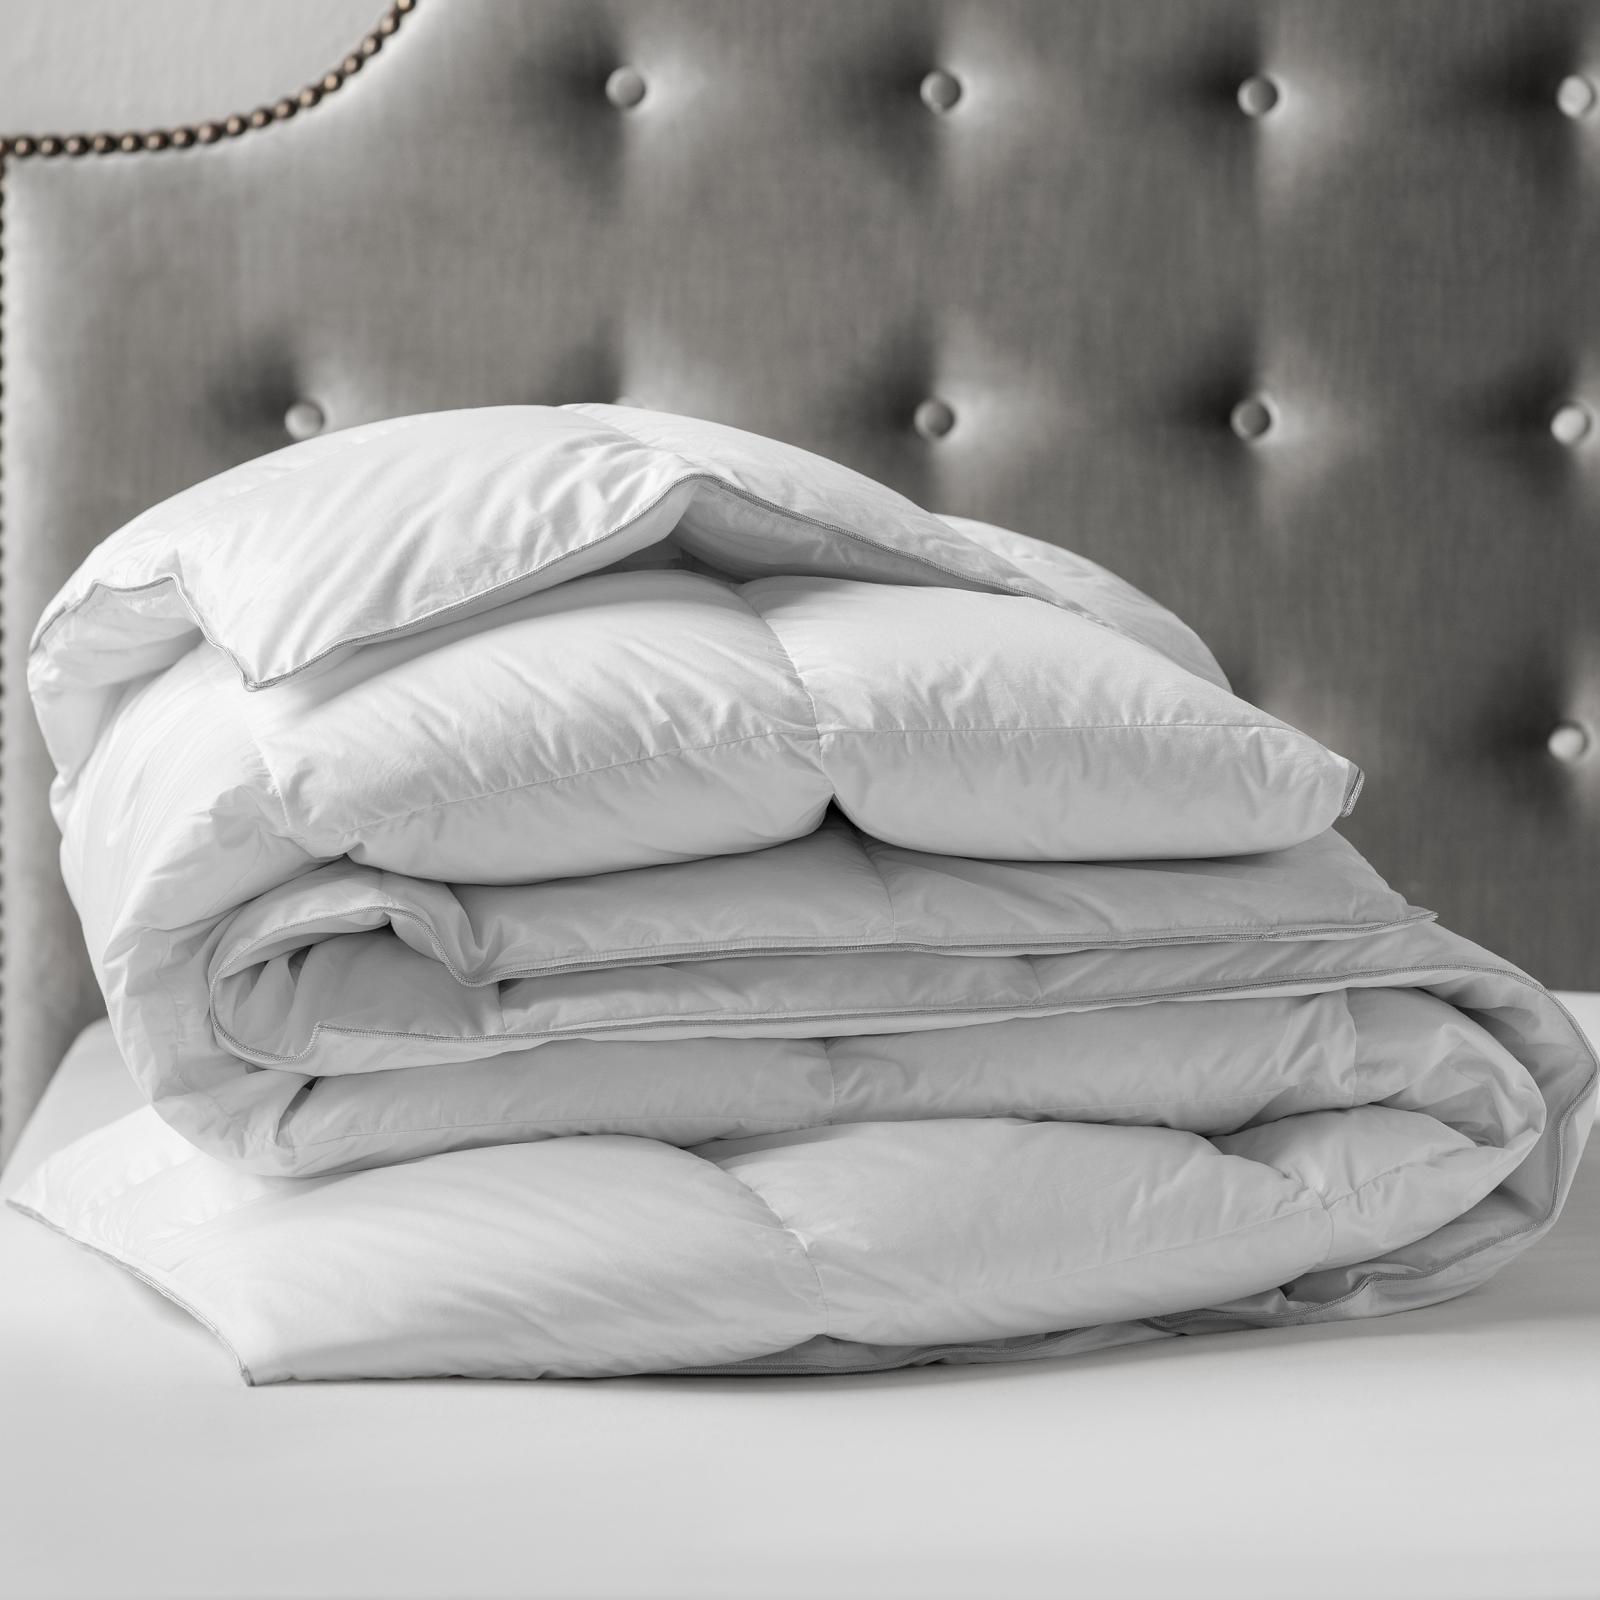 Одеяло Кайзер (20.04.13.0051), цвет белый, размер 200х210 см - фото 4